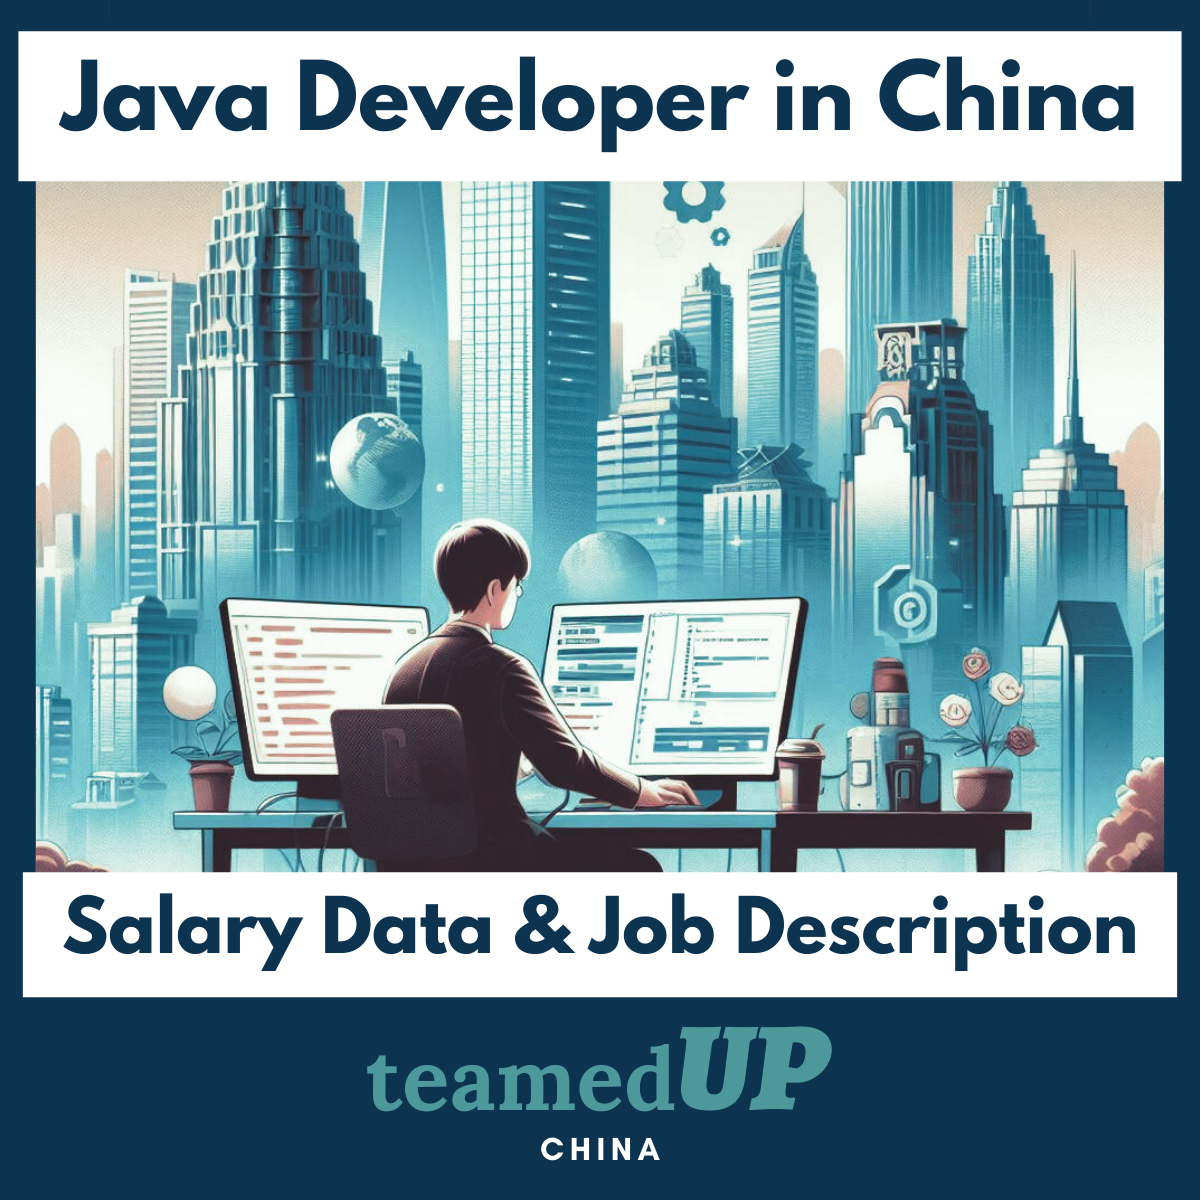 Java Developer in China: Average Salary and JD - TeamedUp China